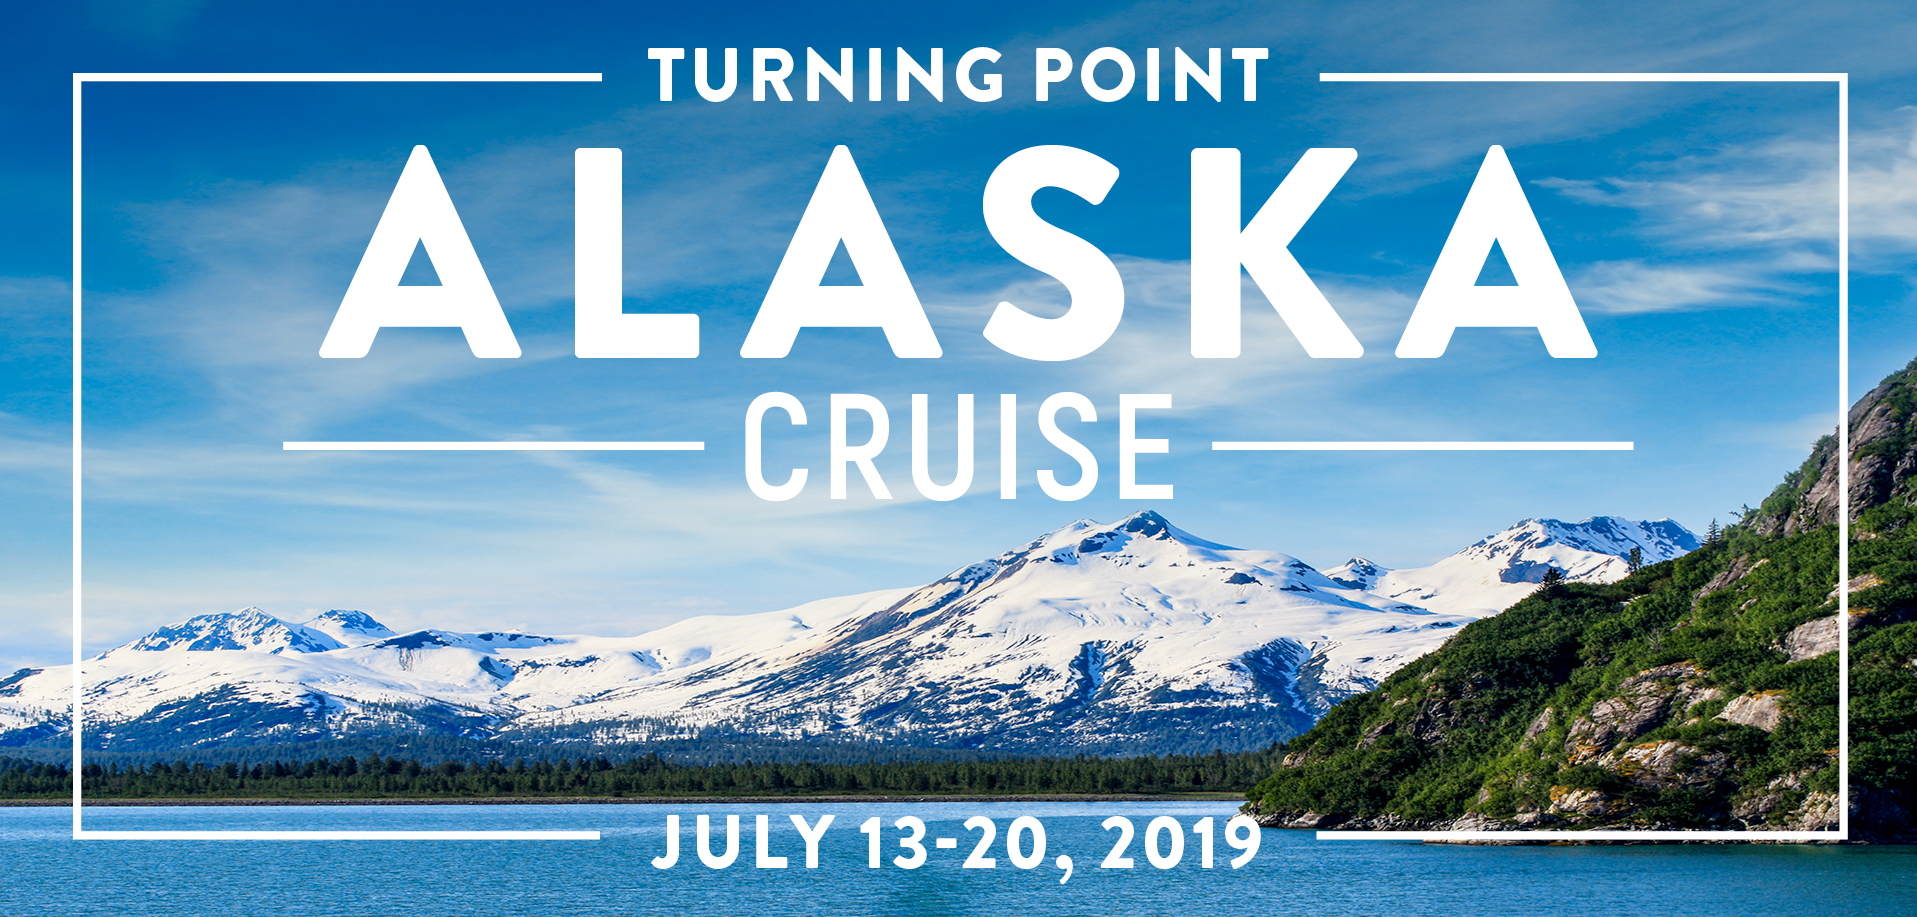 Turning Point Alaska Cruise The Bridge 101.1 FM & 1120 AM